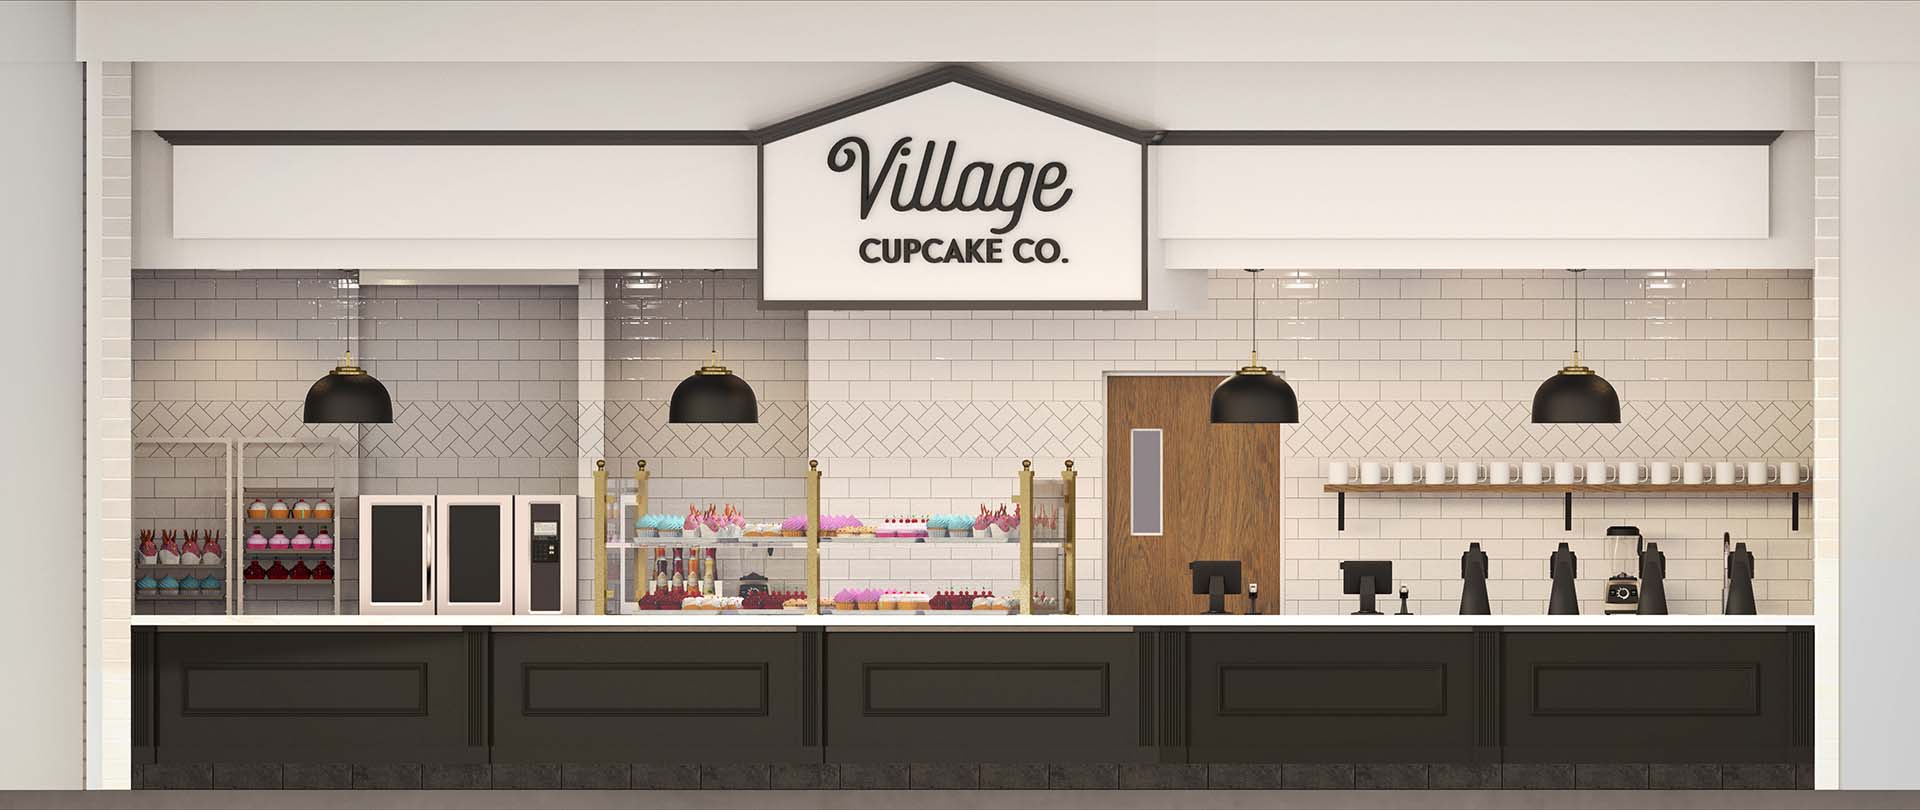 Village Cupcake Company - Elevations 4499-VillageCupcakeCompany-dv2-02b-1920.jpg